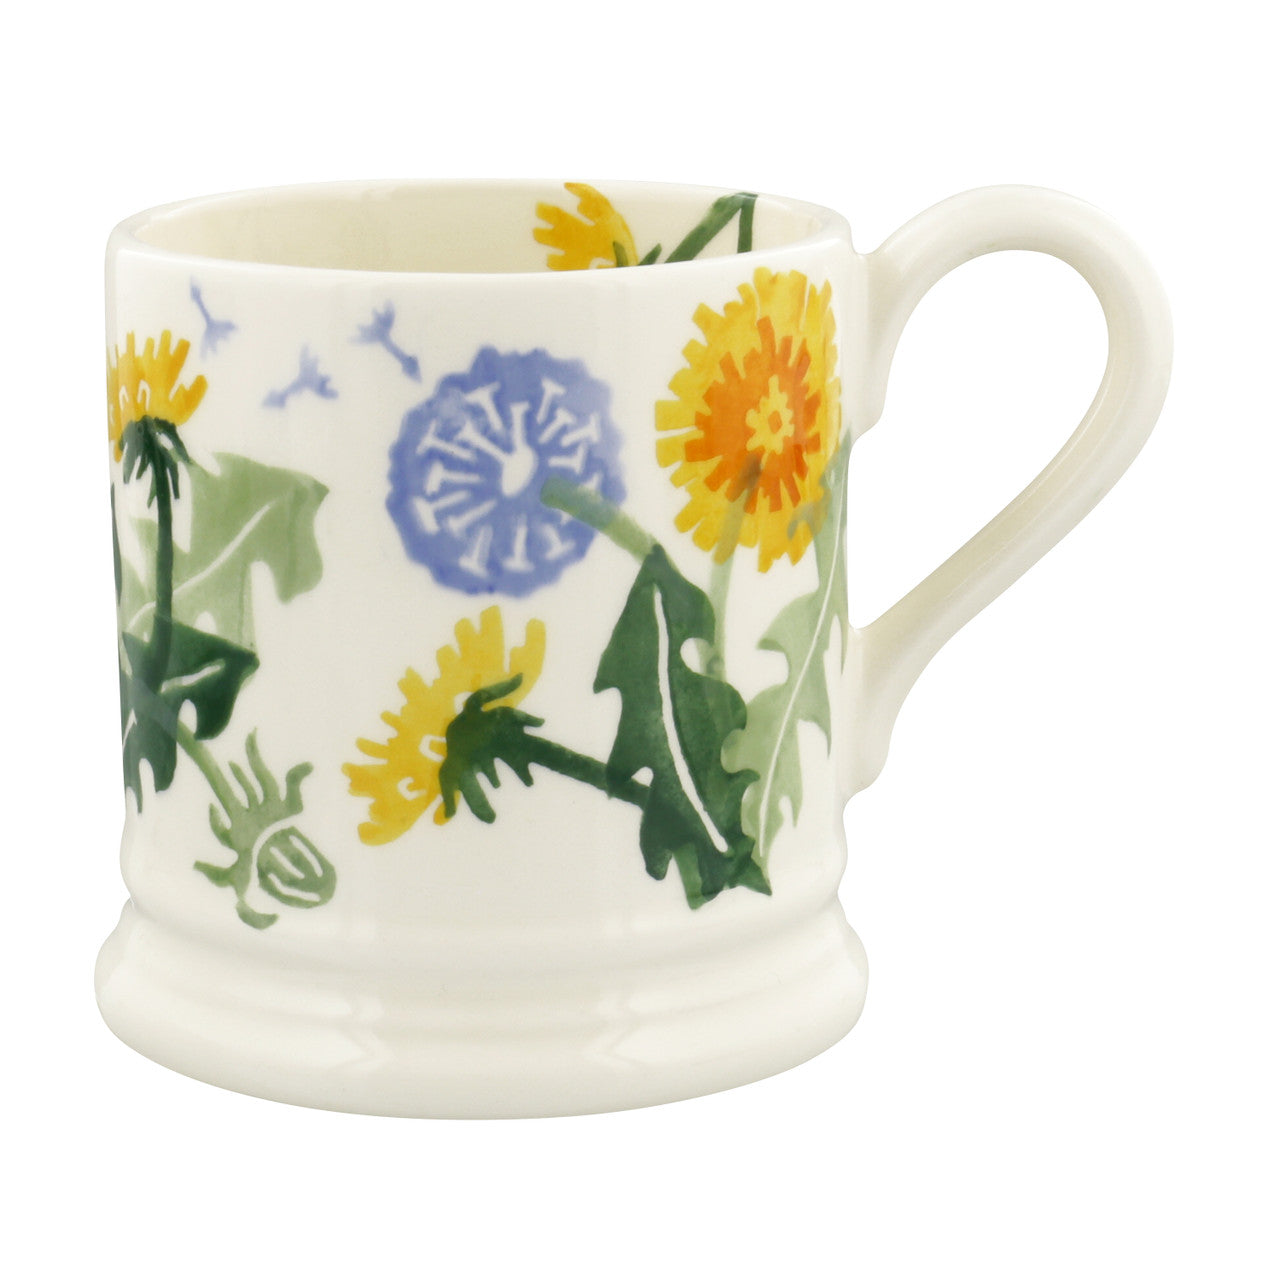 Hand made Dandelion 1/2 pint mug by Emma Bridgewater.